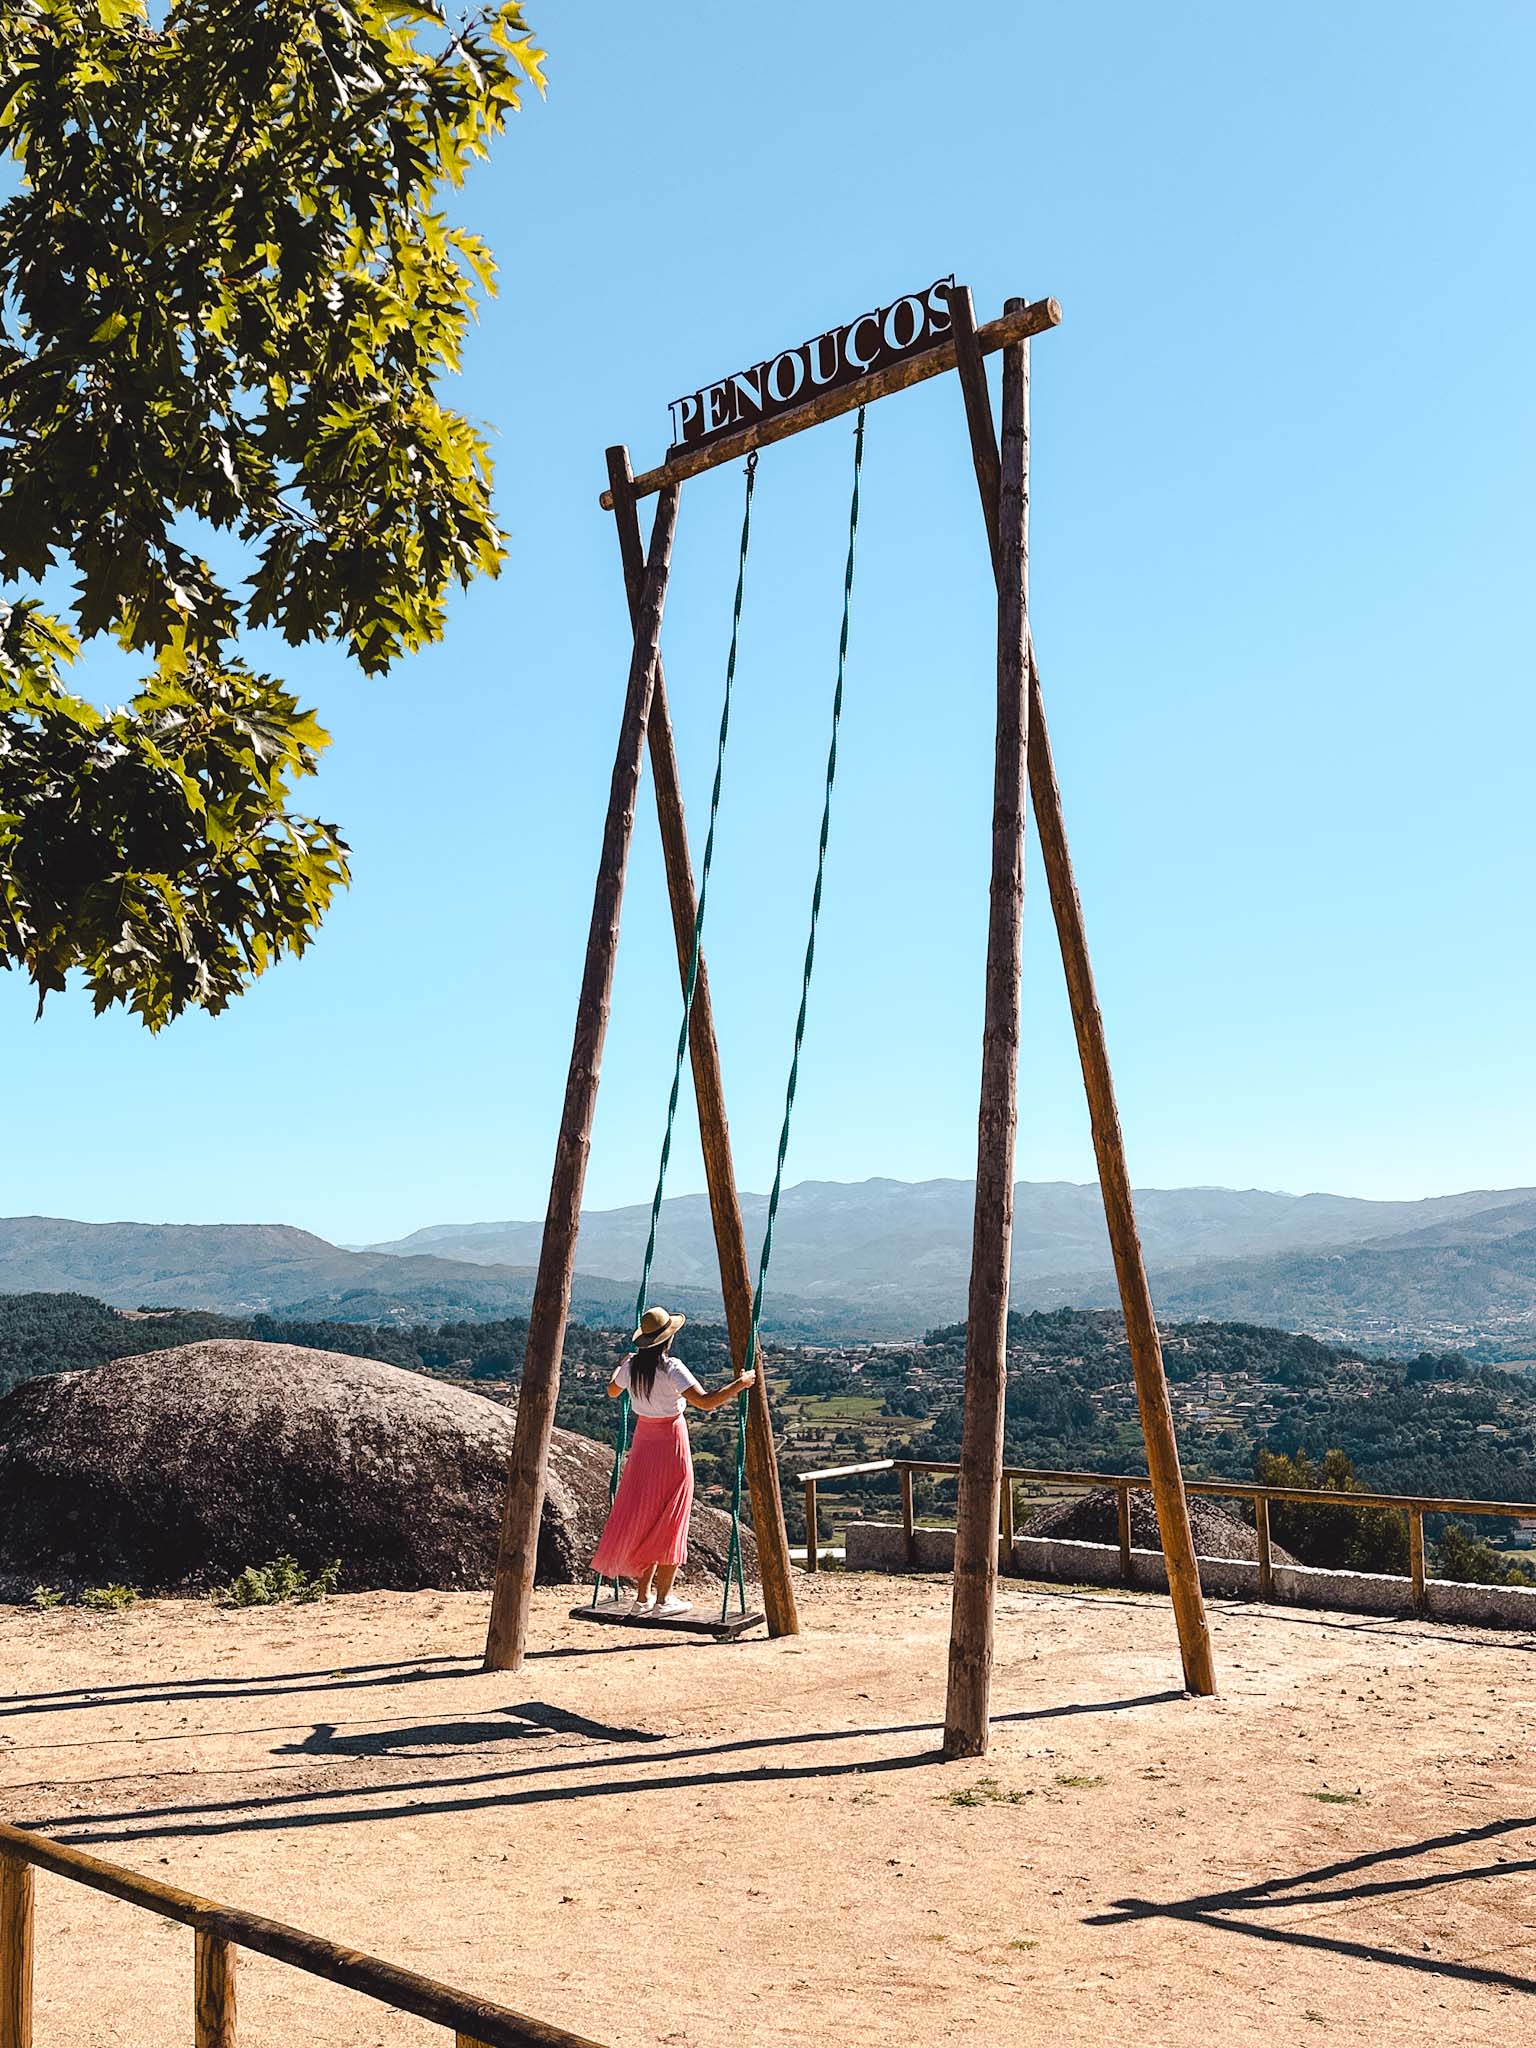 Swings in Portugal - Baloiço de Penouços Padreiro